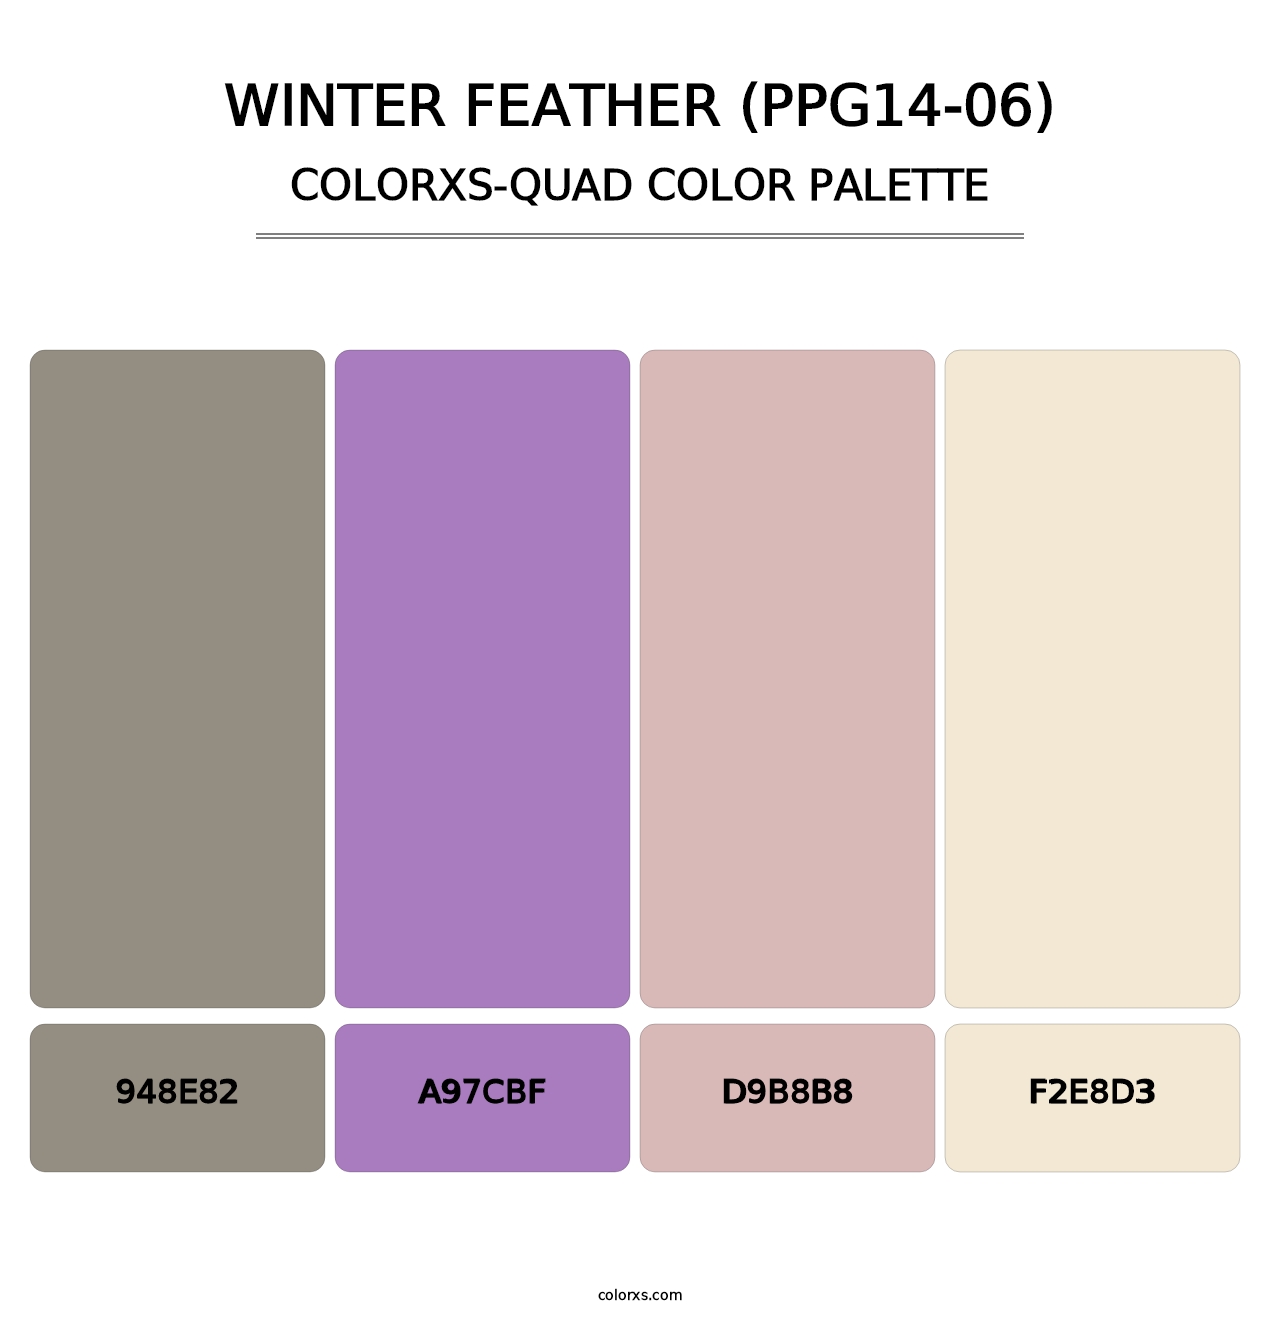 Winter Feather (PPG14-06) - Colorxs Quad Palette